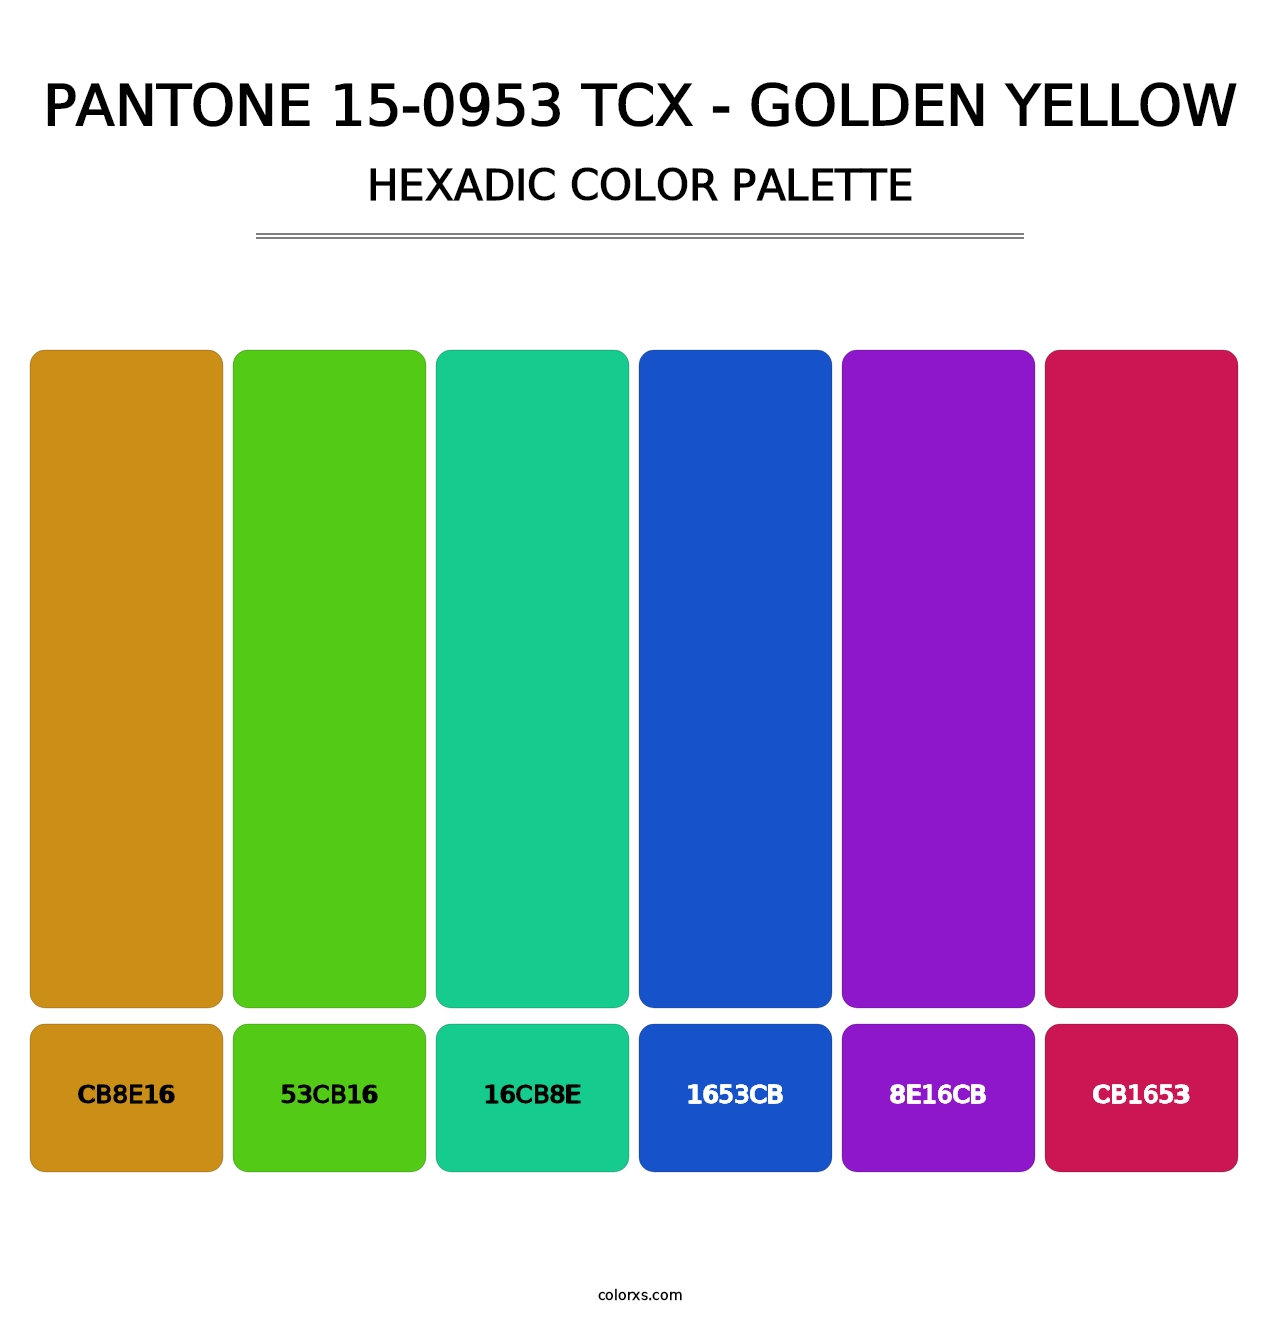 PANTONE 15-0953 TCX - Golden Yellow - Hexadic Color Palette